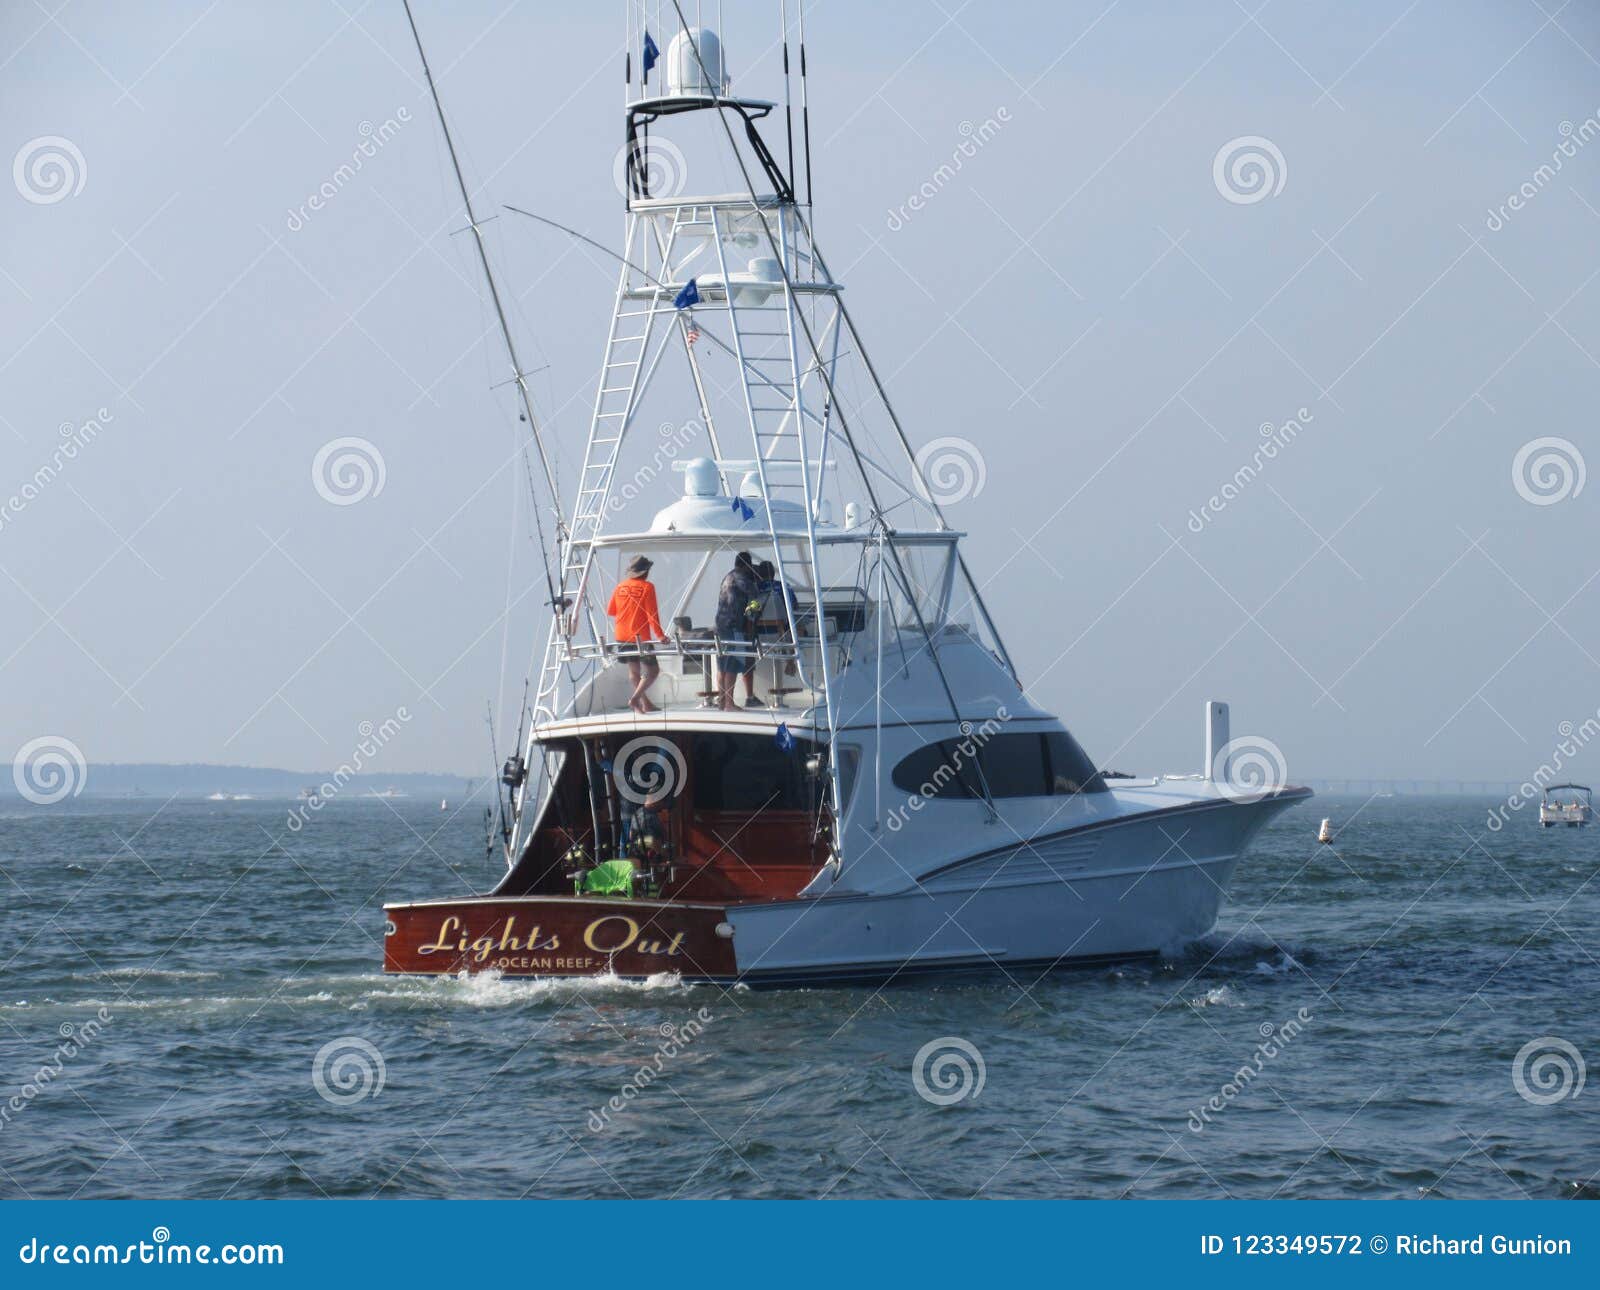 8,634 Tuna Fishing Sea Stock Photos - Free & Royalty-Free Stock Photos from  Dreamstime